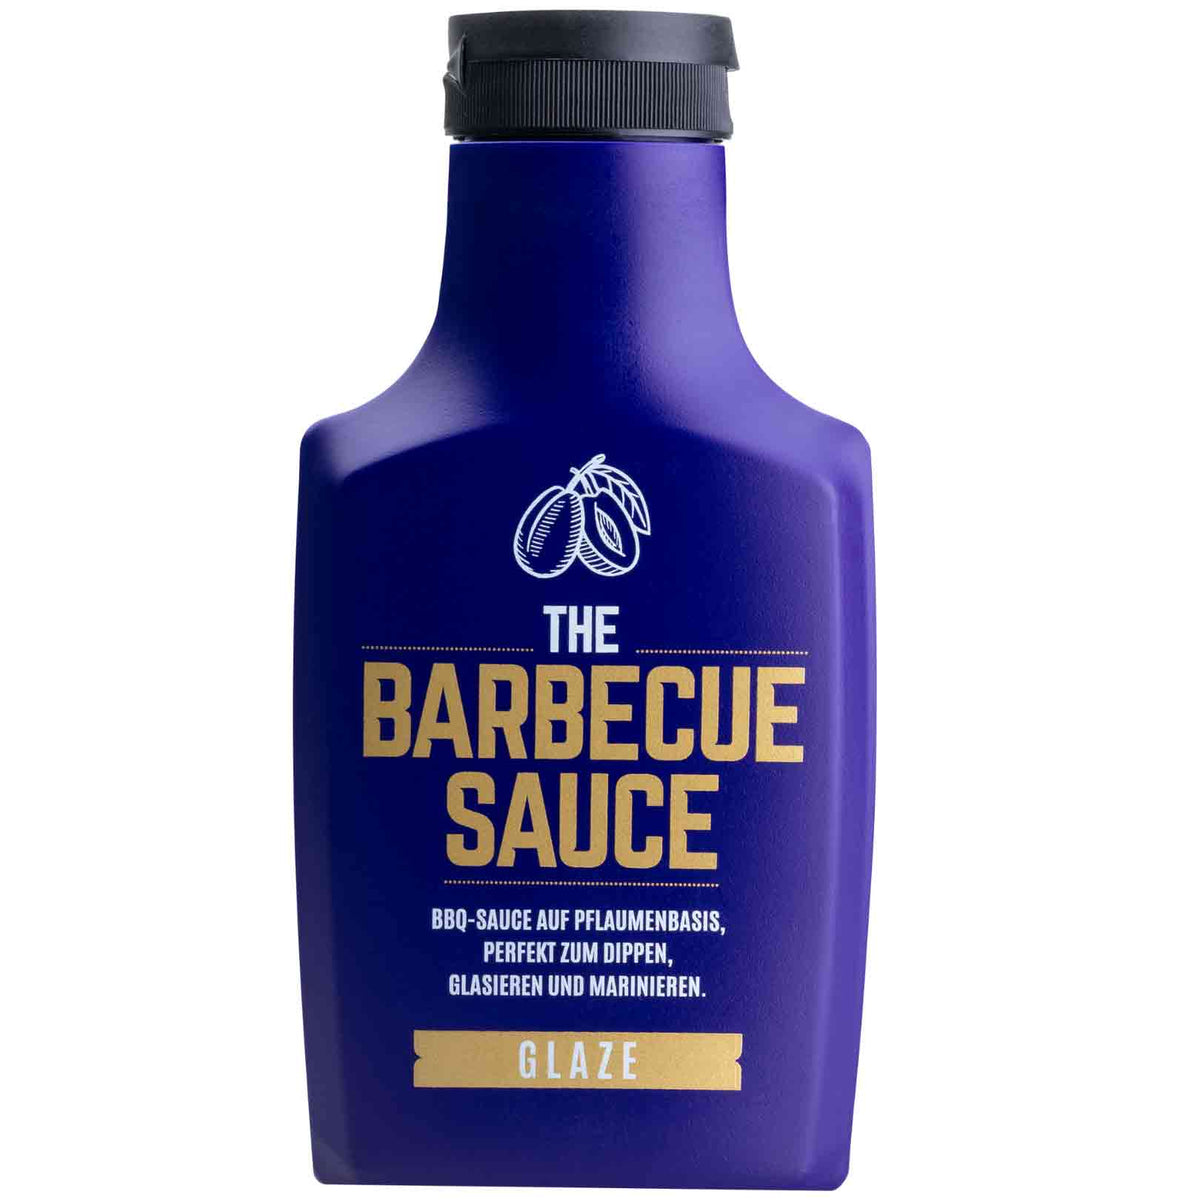 The Barbecue Sauce - BBQ & Grillsaucen Geschenkset / Probierset  4 x 390g